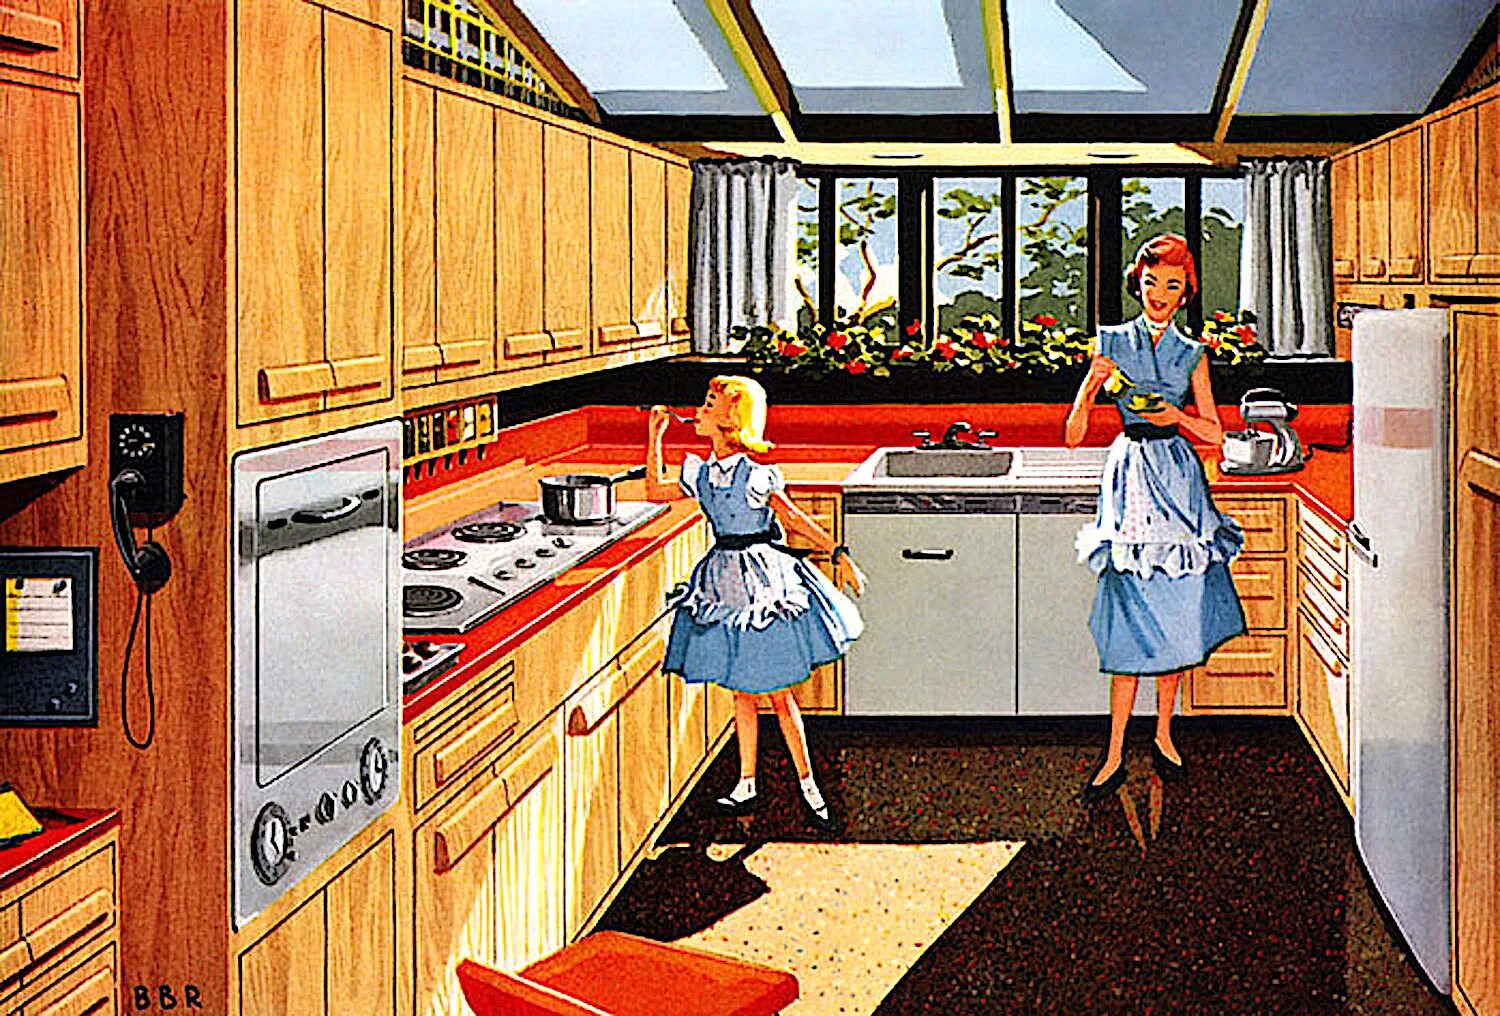 Кухня в стиле 50-х годов. Кухня в стиле 50х. Кухня в стиле 50-х годов США. Кухня в Советском стиле. Домашнее хозяйство будущего